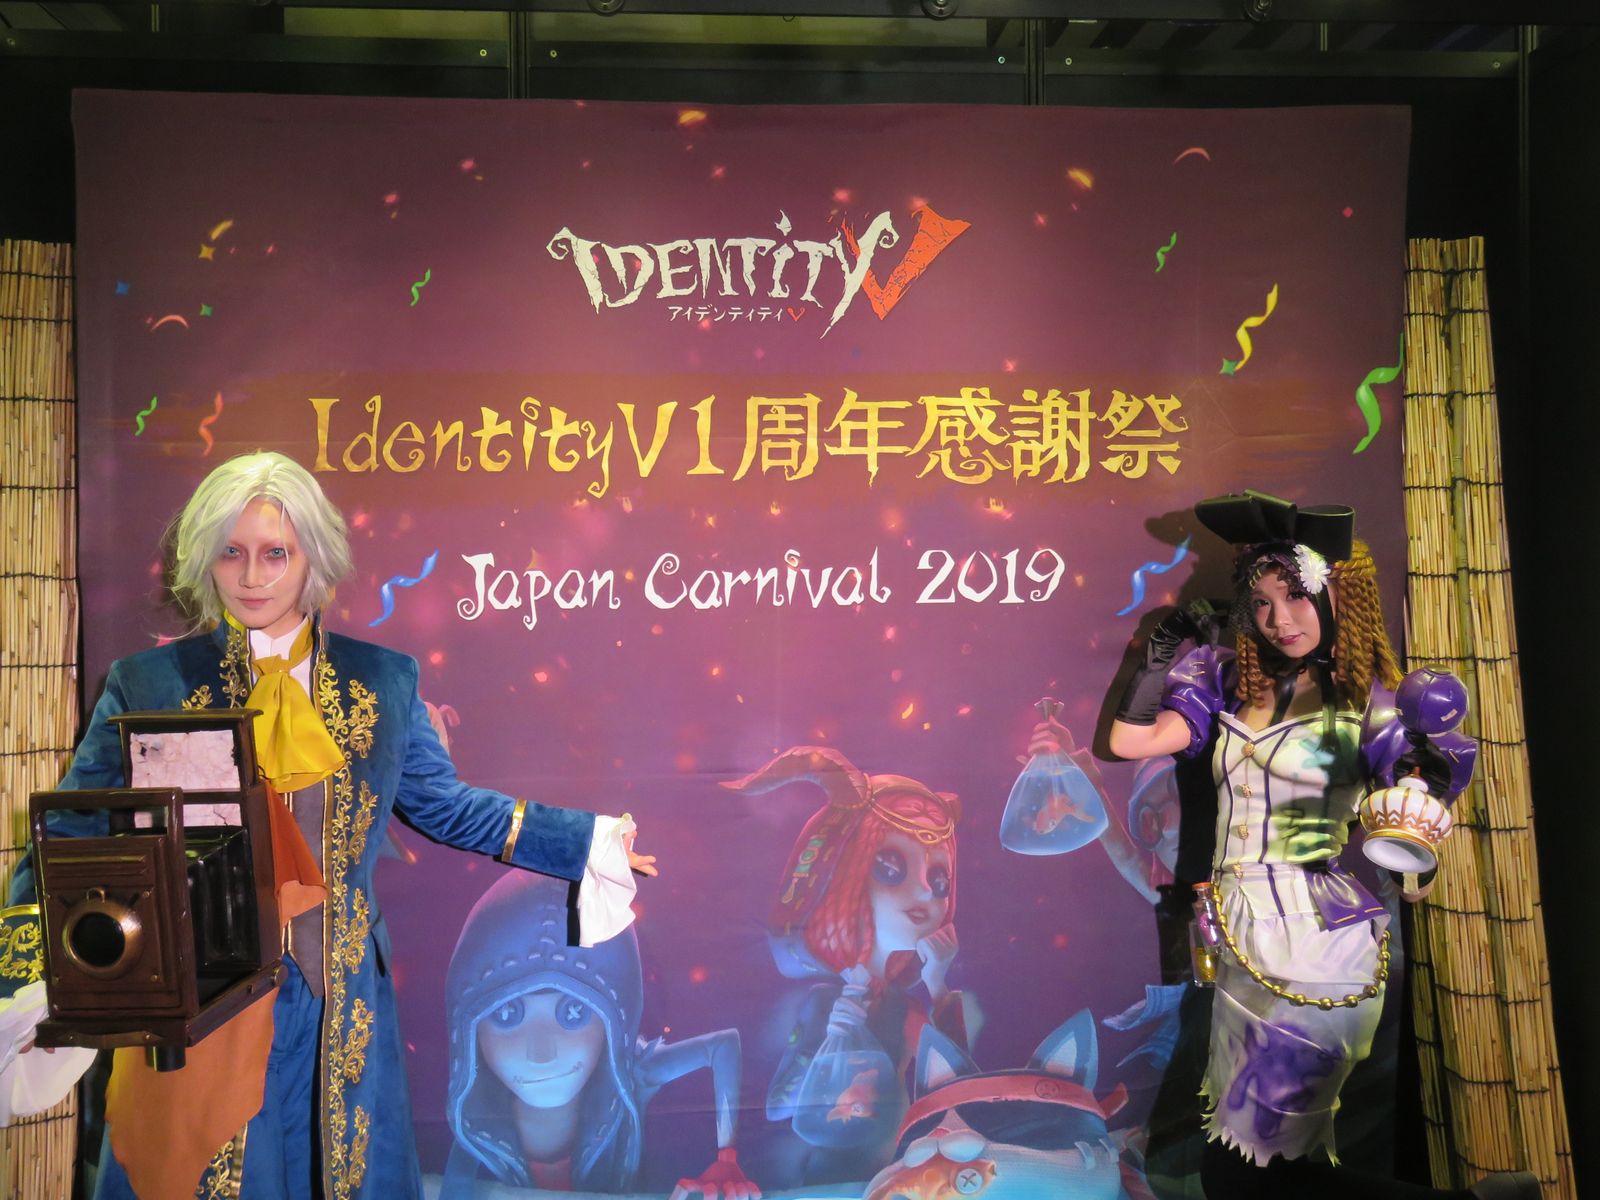 Identity V 第五人格 一色に染まった会場は大盛り上がり 1周年感謝祭 Japan Carnival 19 レポート Game Watch